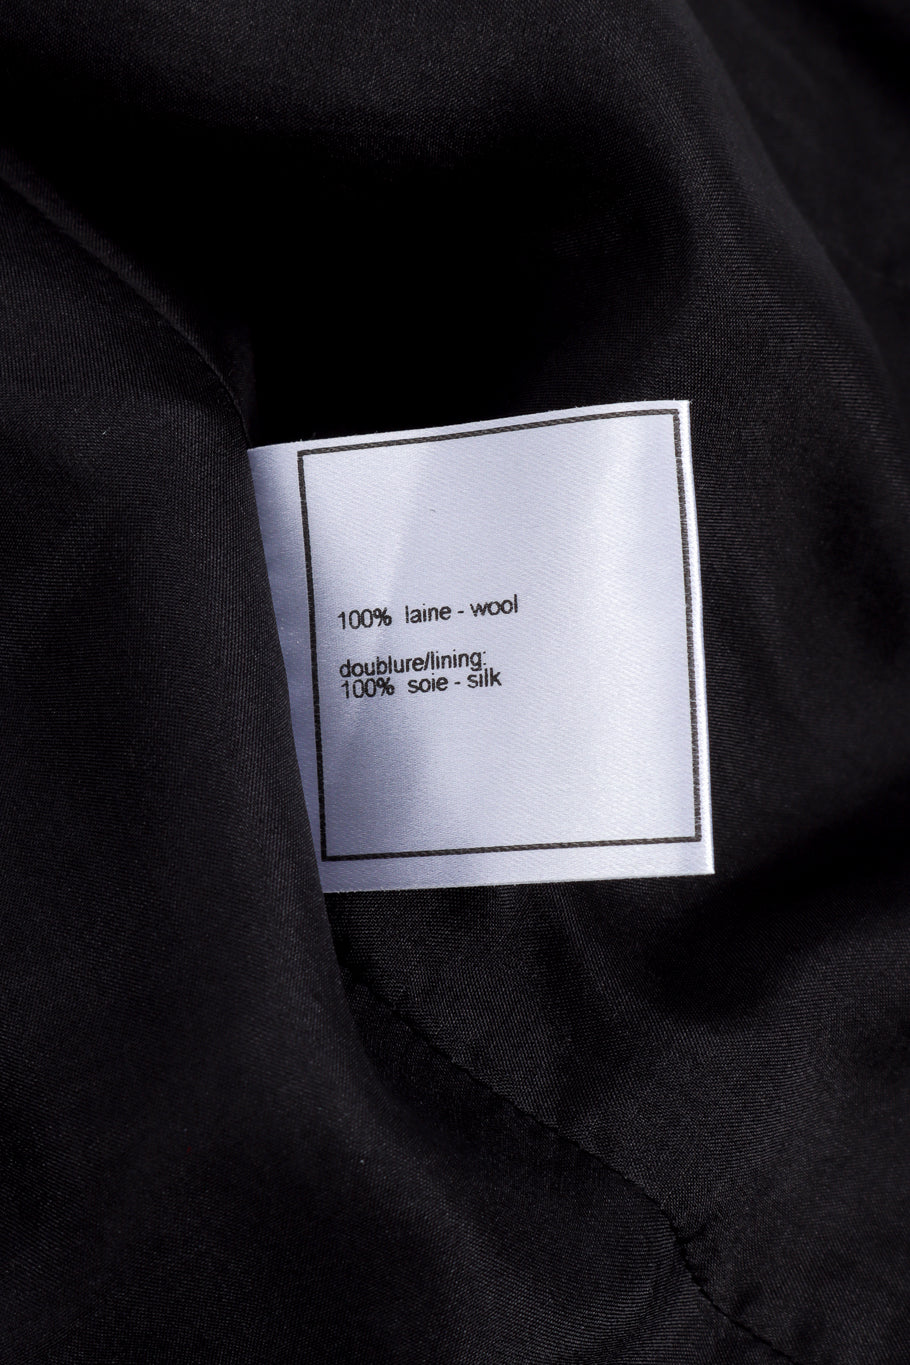 Chanel 2000 F/W Knit Wool Jacket content label @recess la